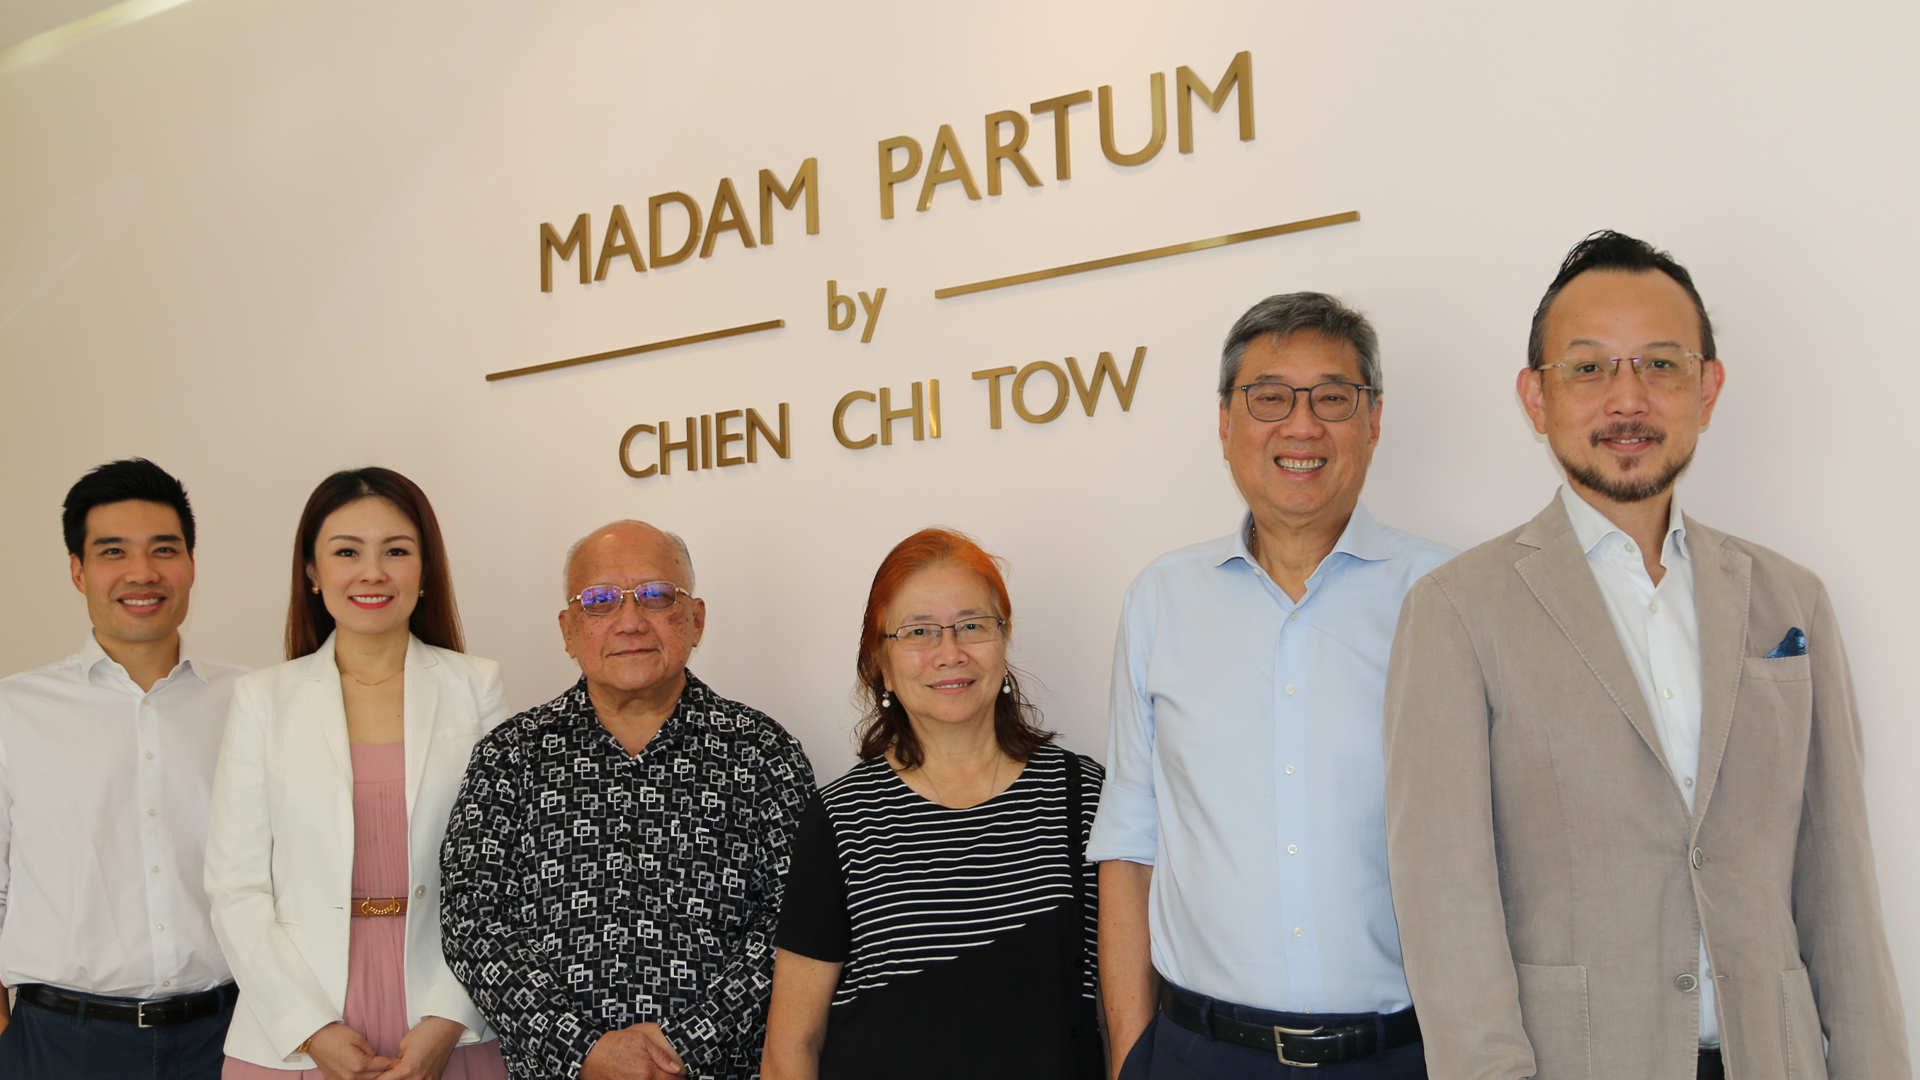 (right to left): Dominic Wong (Group CEO, EYSI), Richard Eu (Chairman, EYSI), Mrs Lim, Master Lim Choon Huat (Founder, CCTH), Lim Kim Yen (founder, Madam Partum), Richie Eu (MD, Mergers & Acquisitions, EYSI)